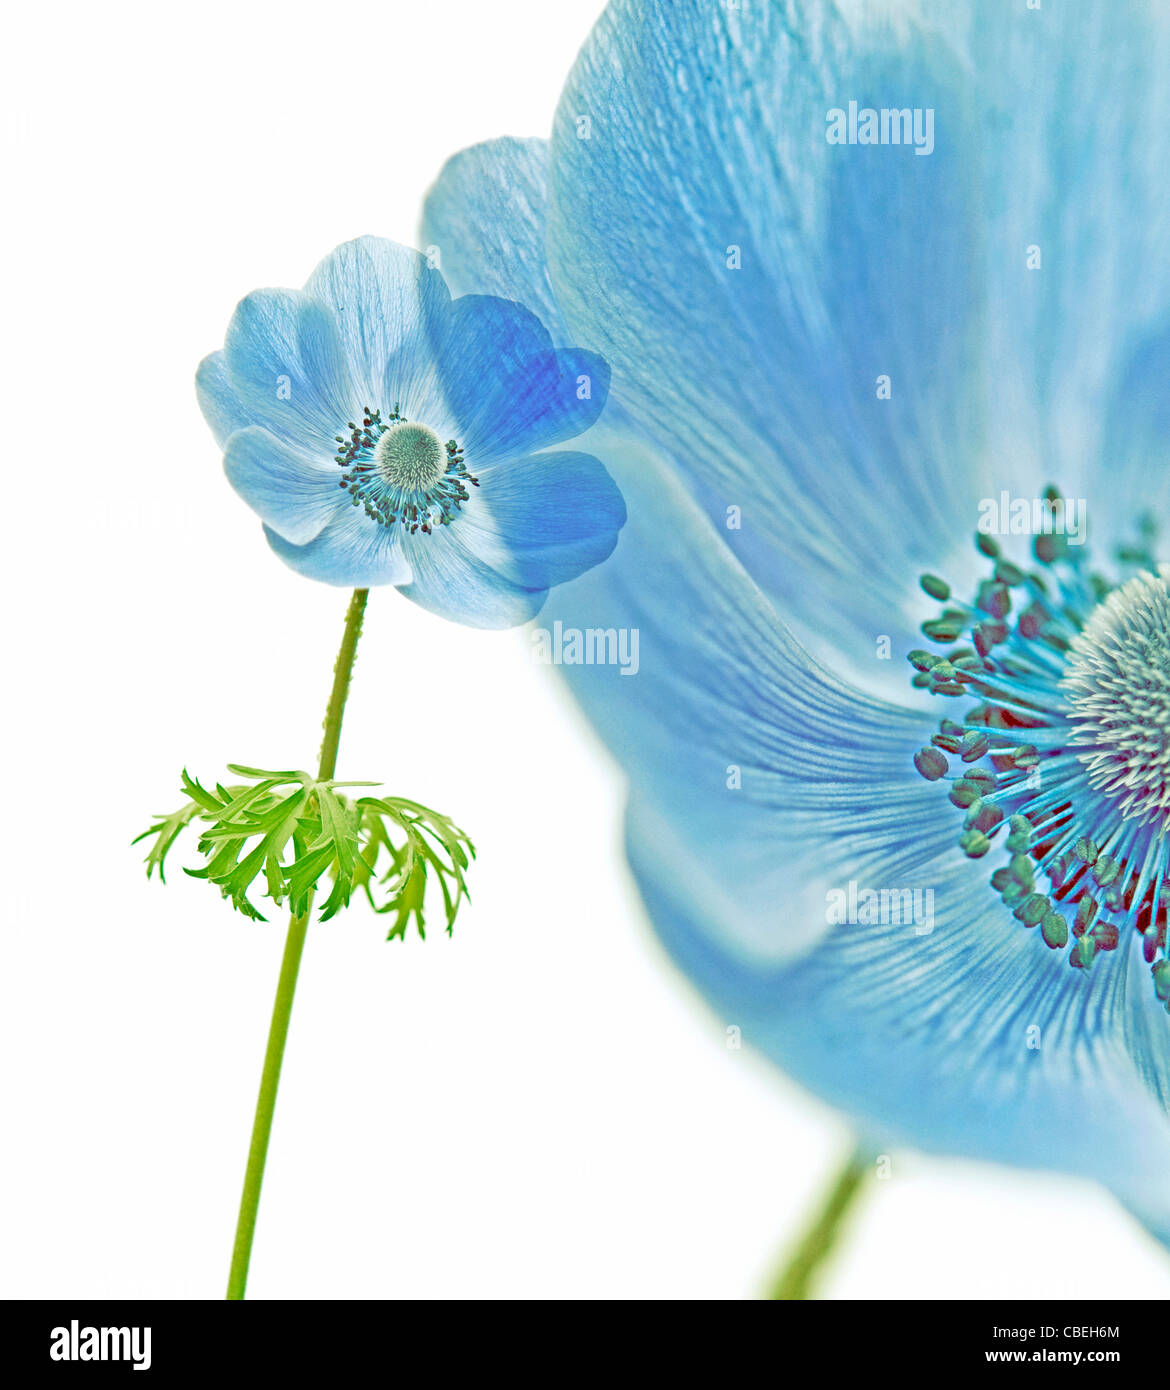 Anemone coronaria, Blue flower subject, White background. Stock Photo